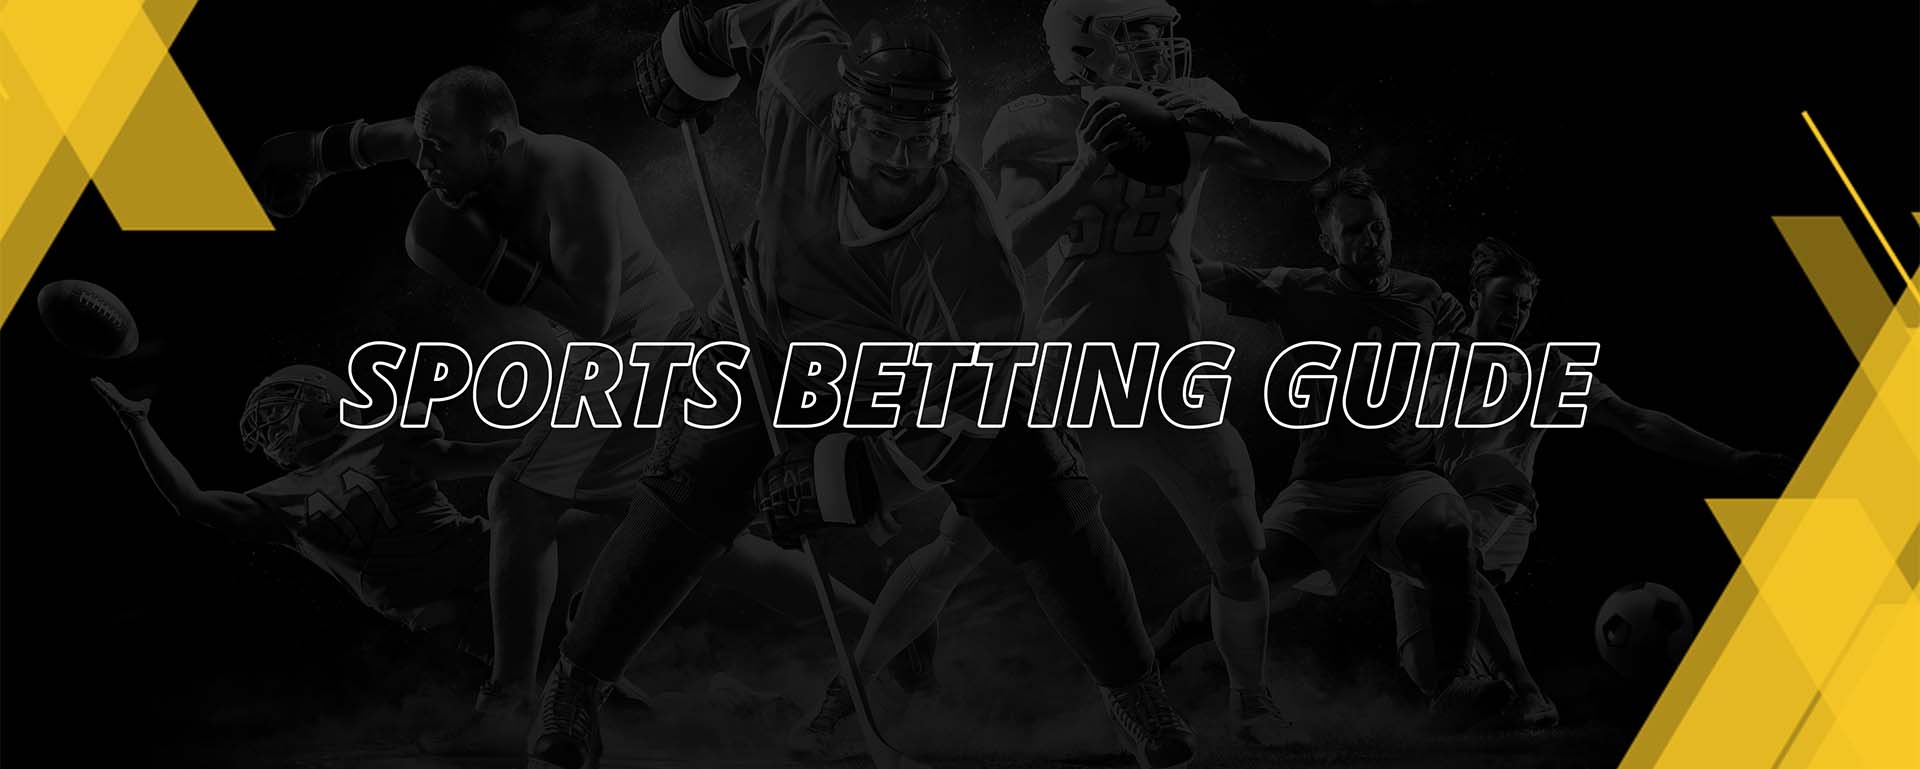 Sporting bett sports betting online australia shopping